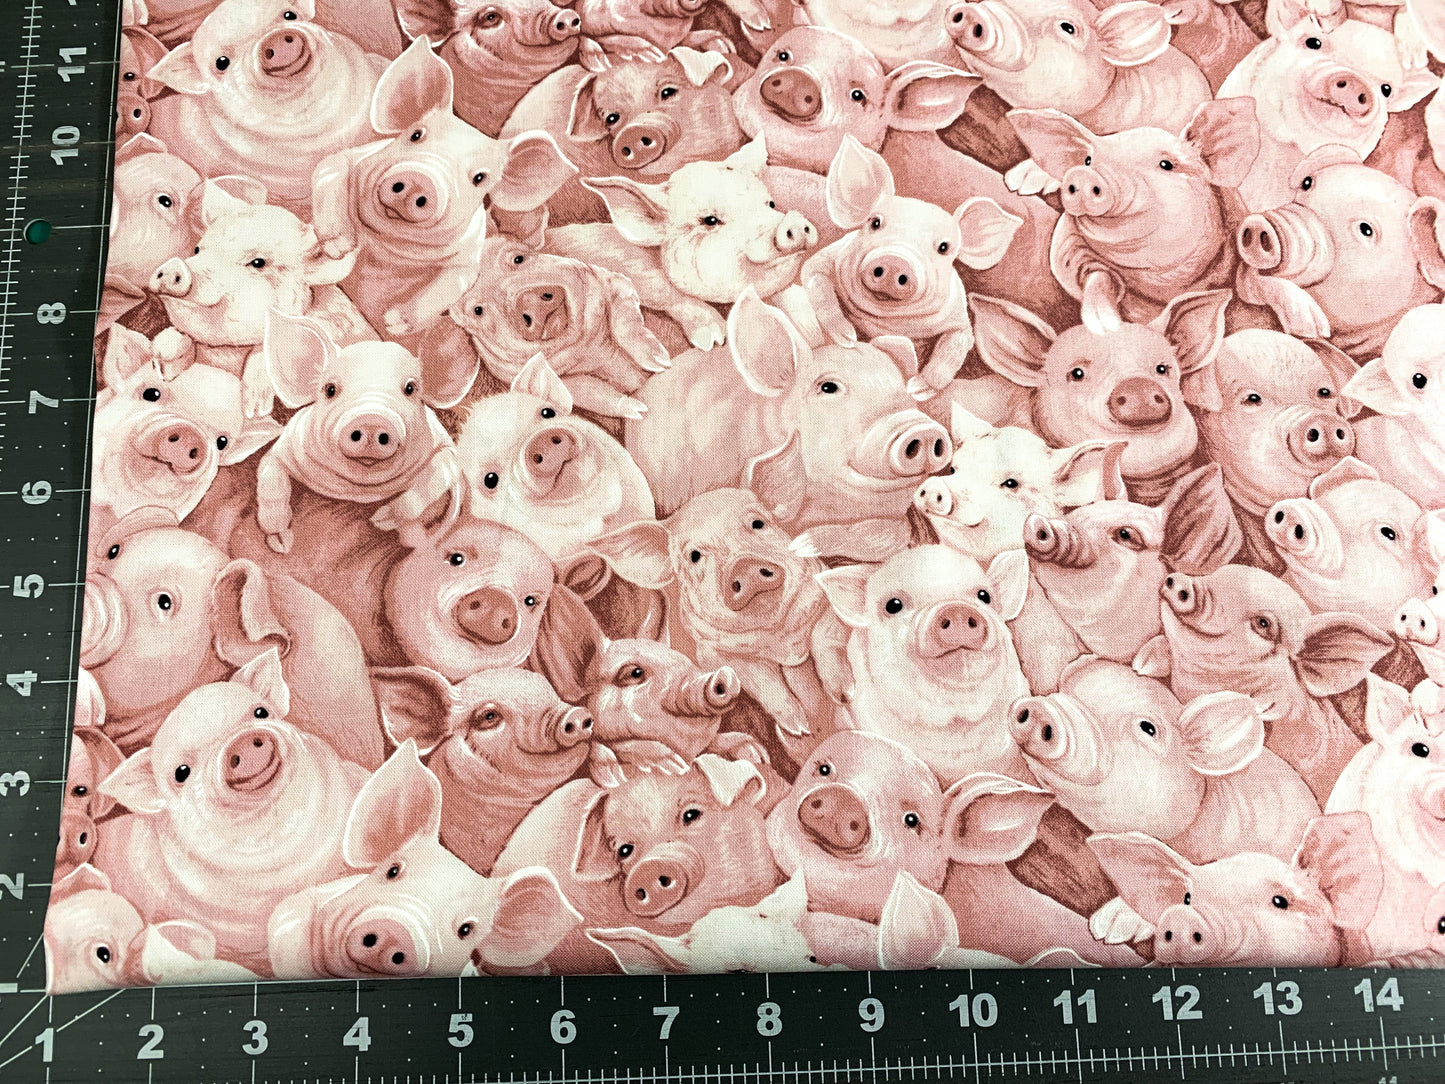 Pink pig fabric C8063 pigs cotton fabric